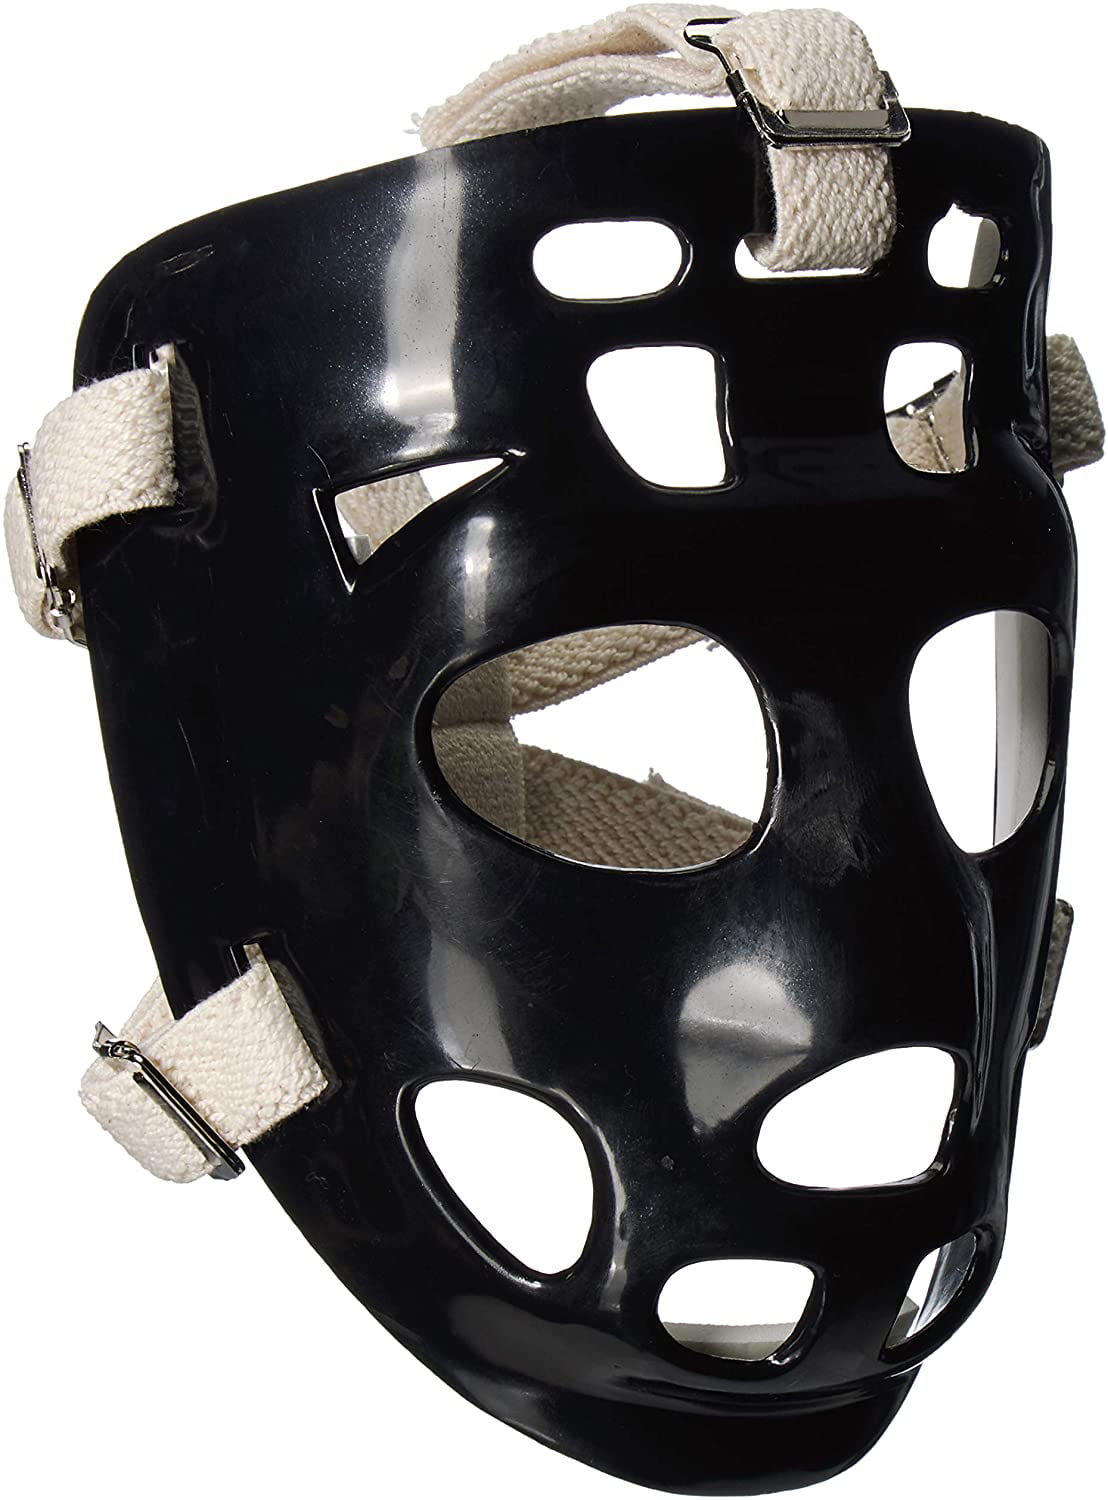 Mylec Goalie Mask Black 